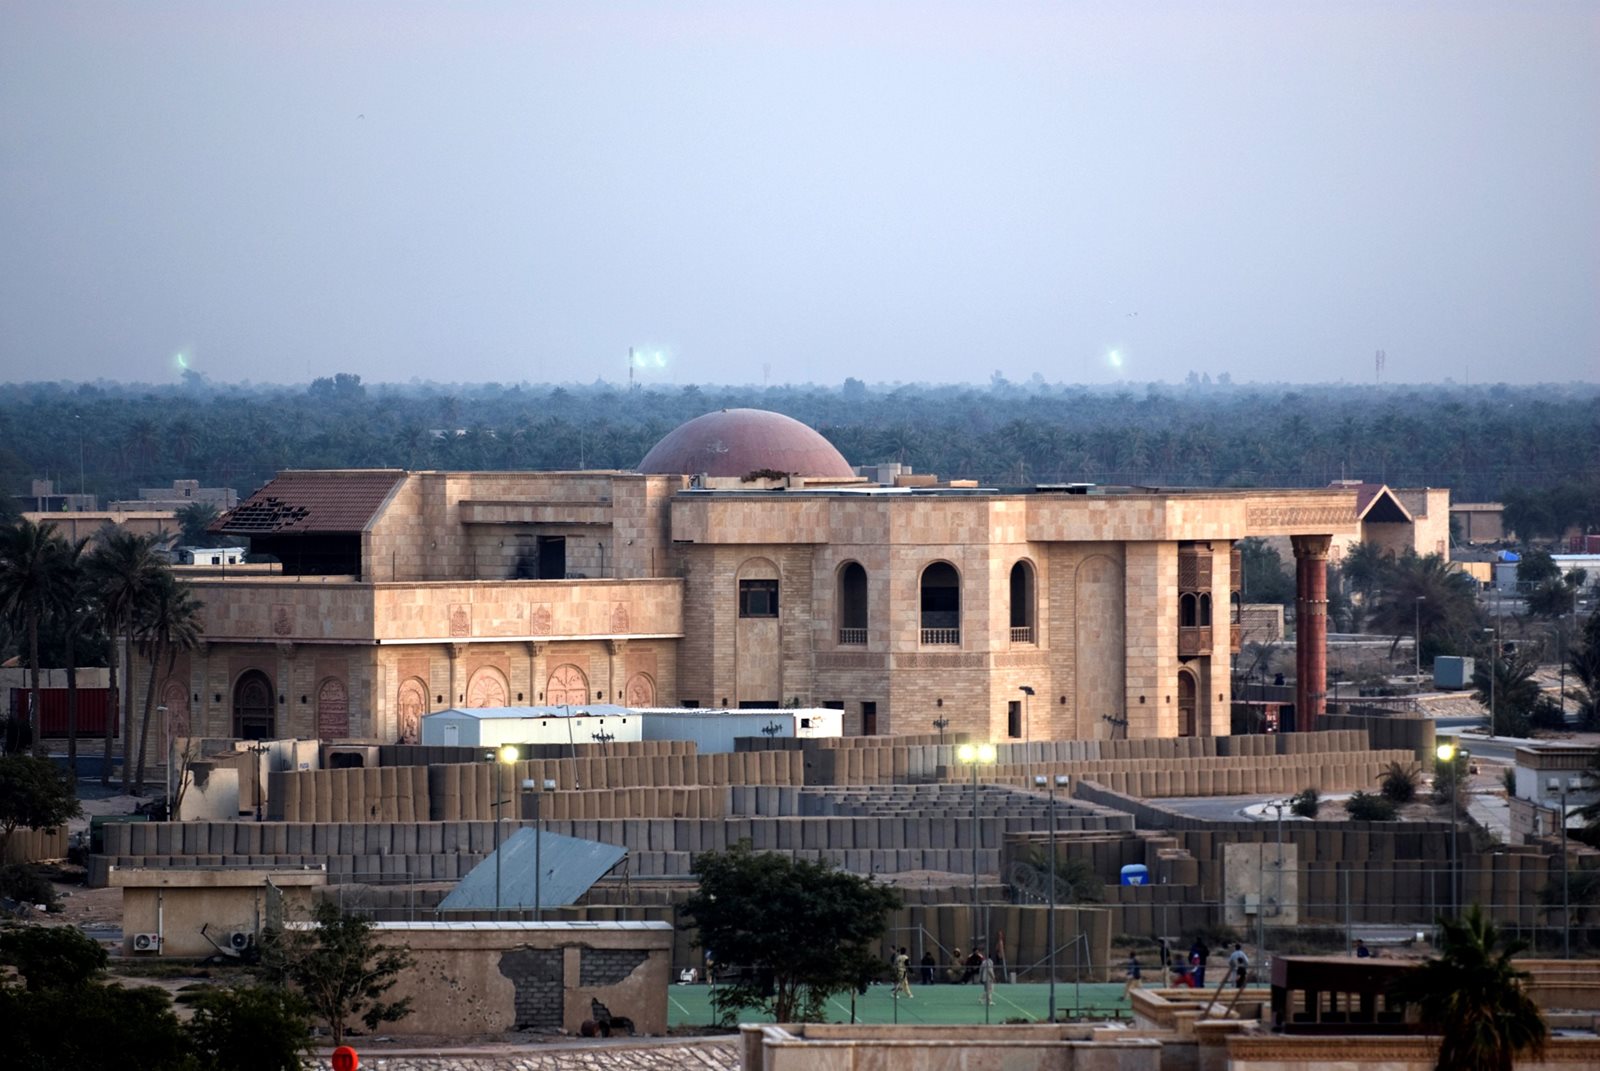 former palace of Saddam Hussein